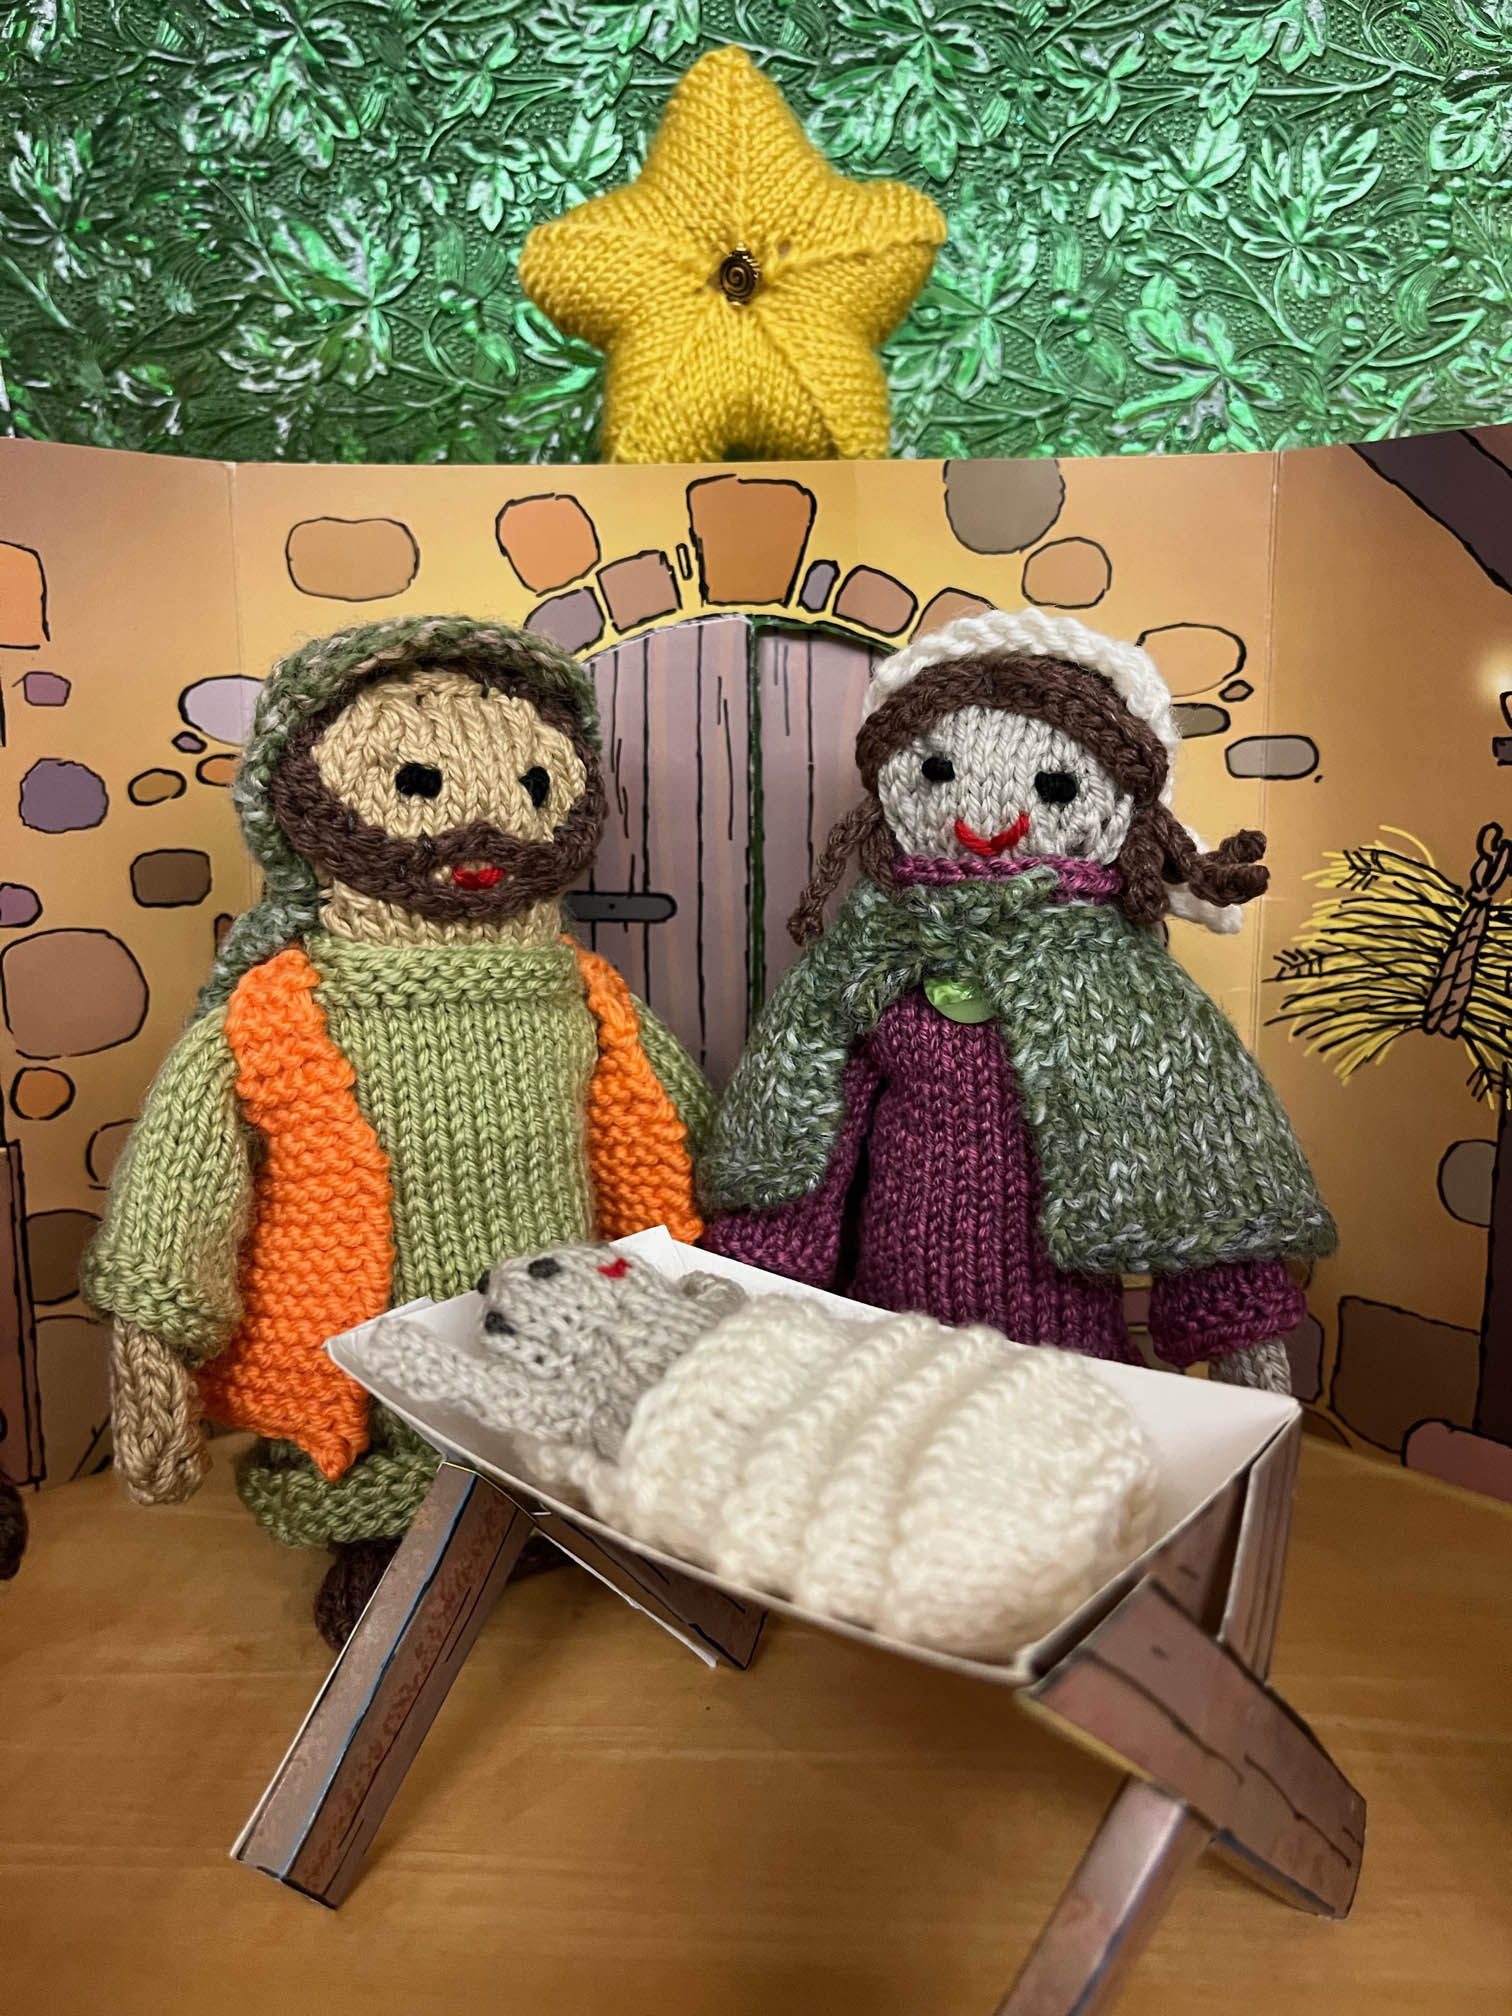 crocheted nativity scene by Sally Evans